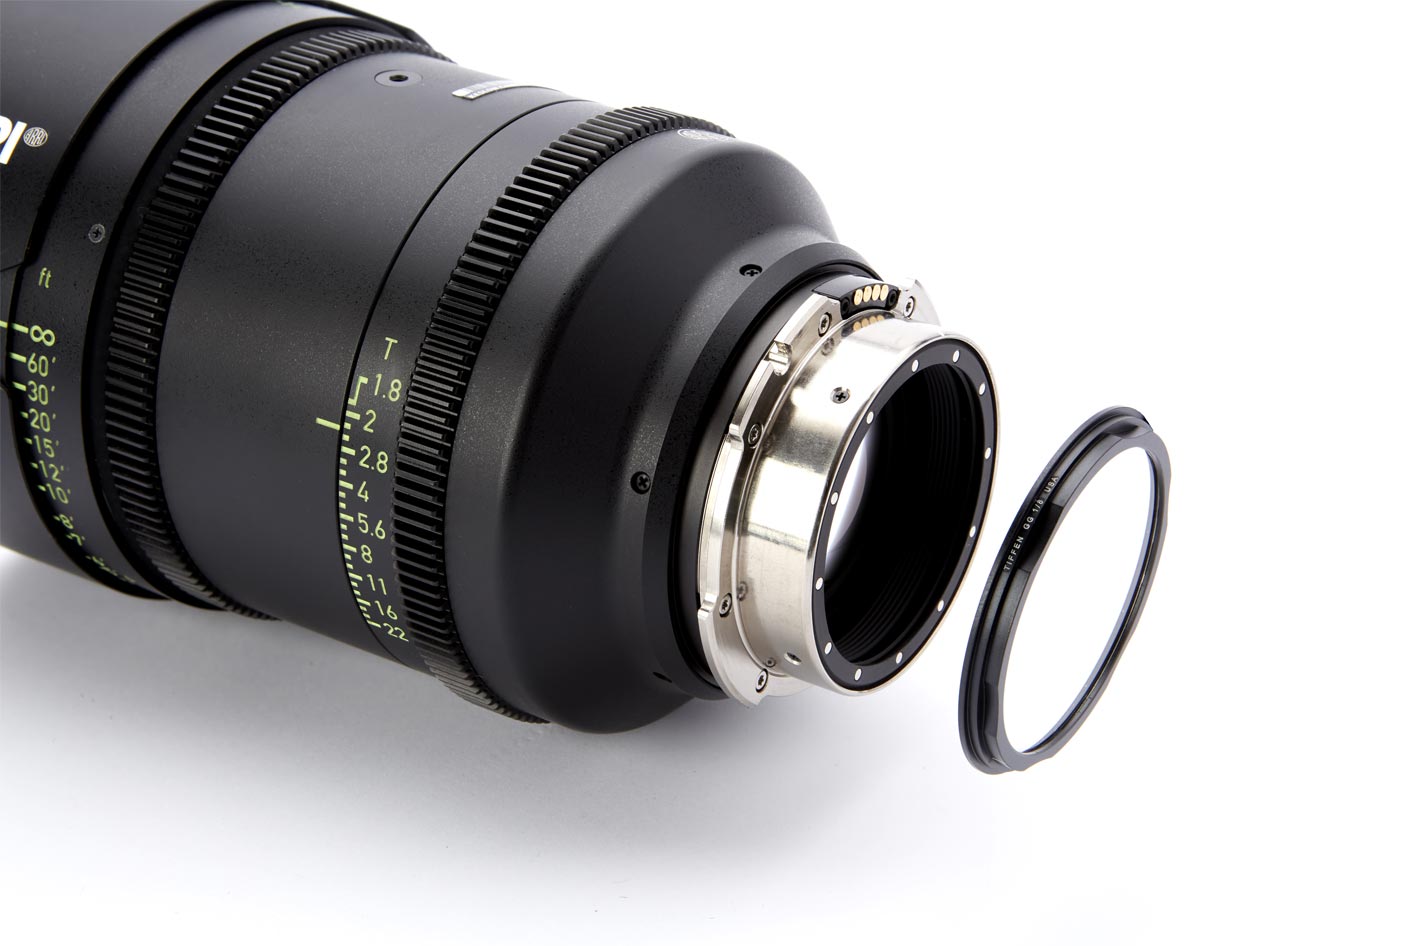 New Tiffen Diffusion Filters for ARRI Signature lenses